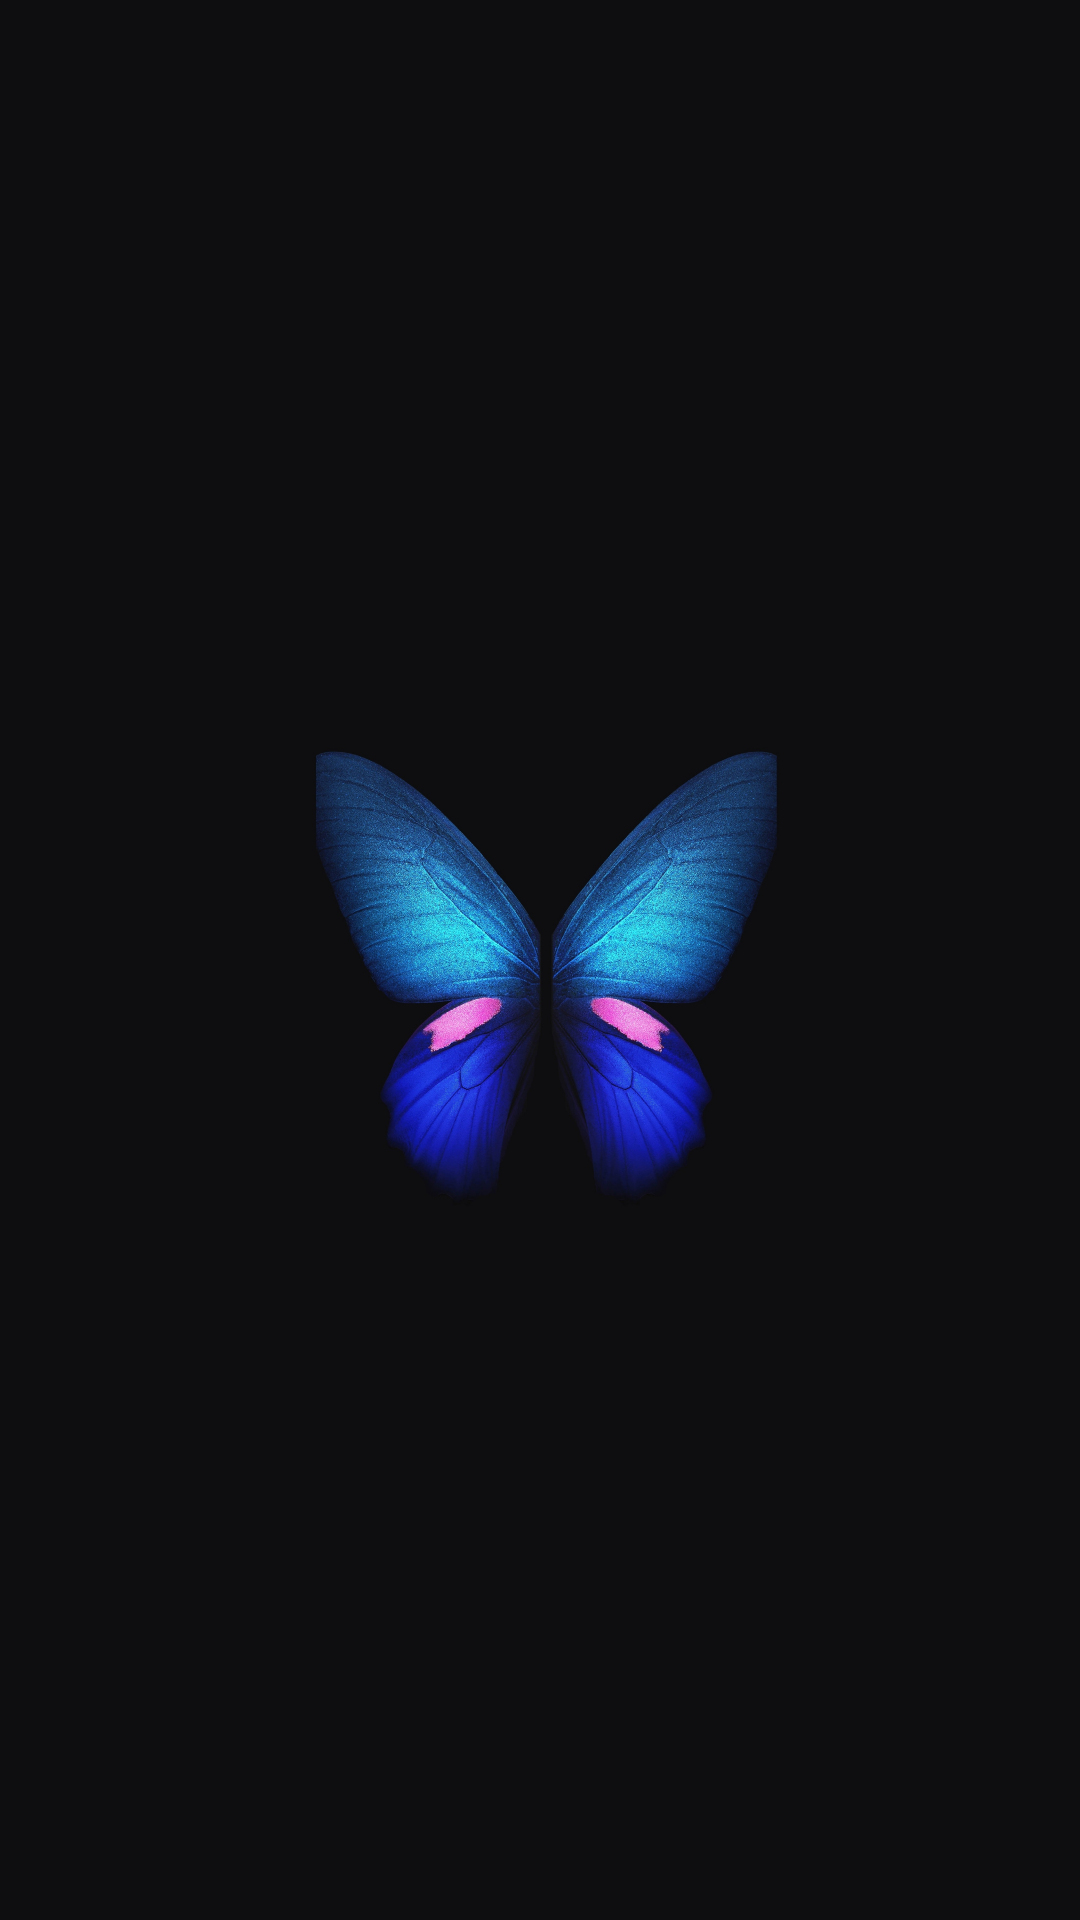 Download wallpaper 1080x1920 samsung galaxy fold, blue butterfly ...